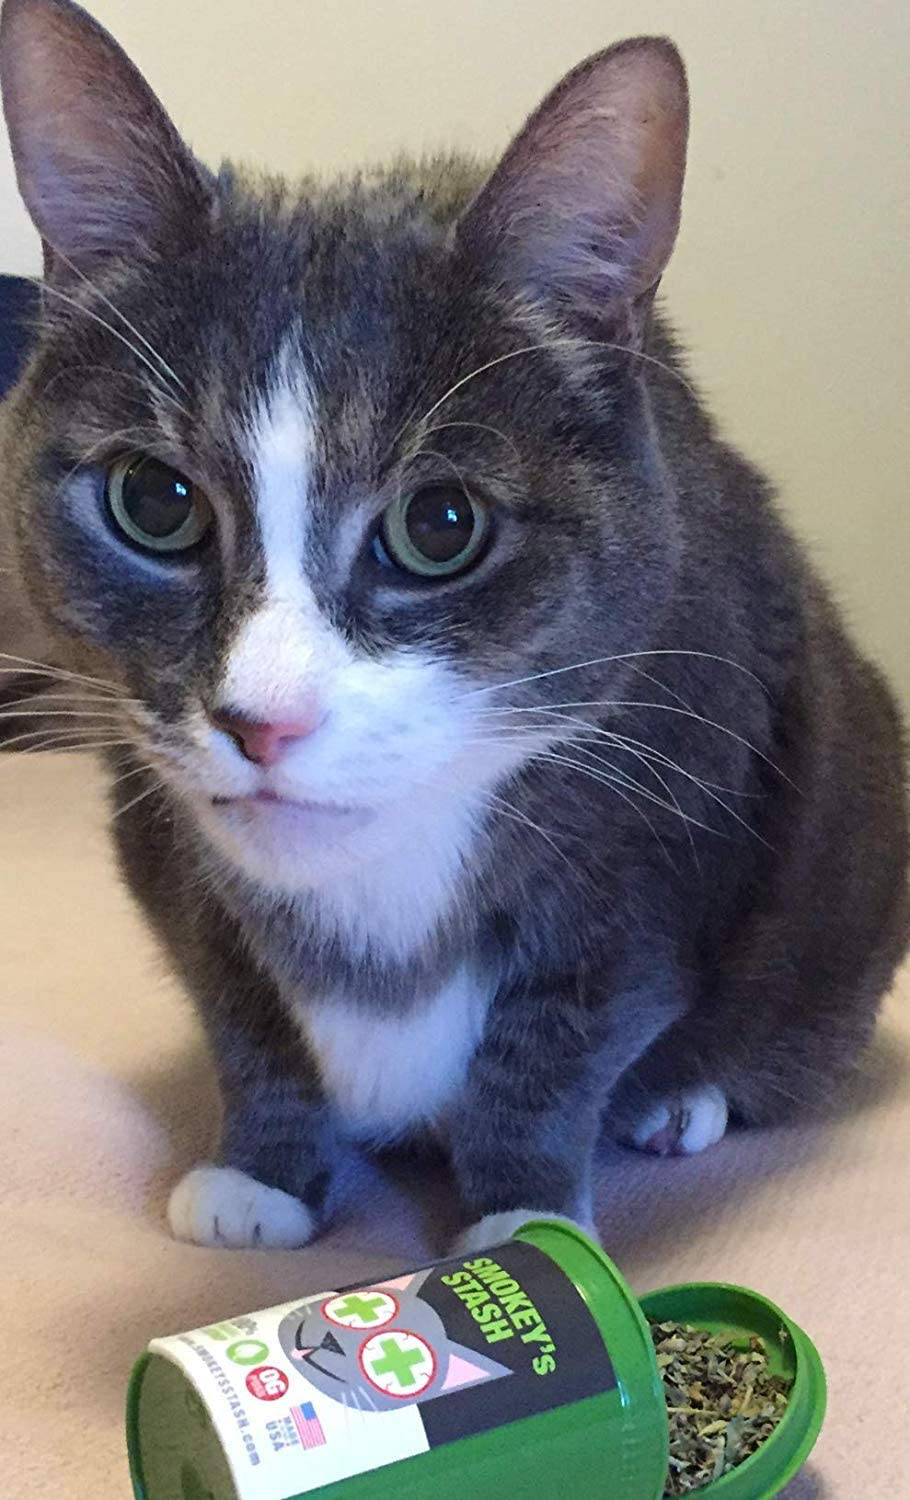 Smokey'S Stash Cat Catnip Spray and Dried Organic Catnip Combo Maximum Potency Cat Nip Bundle